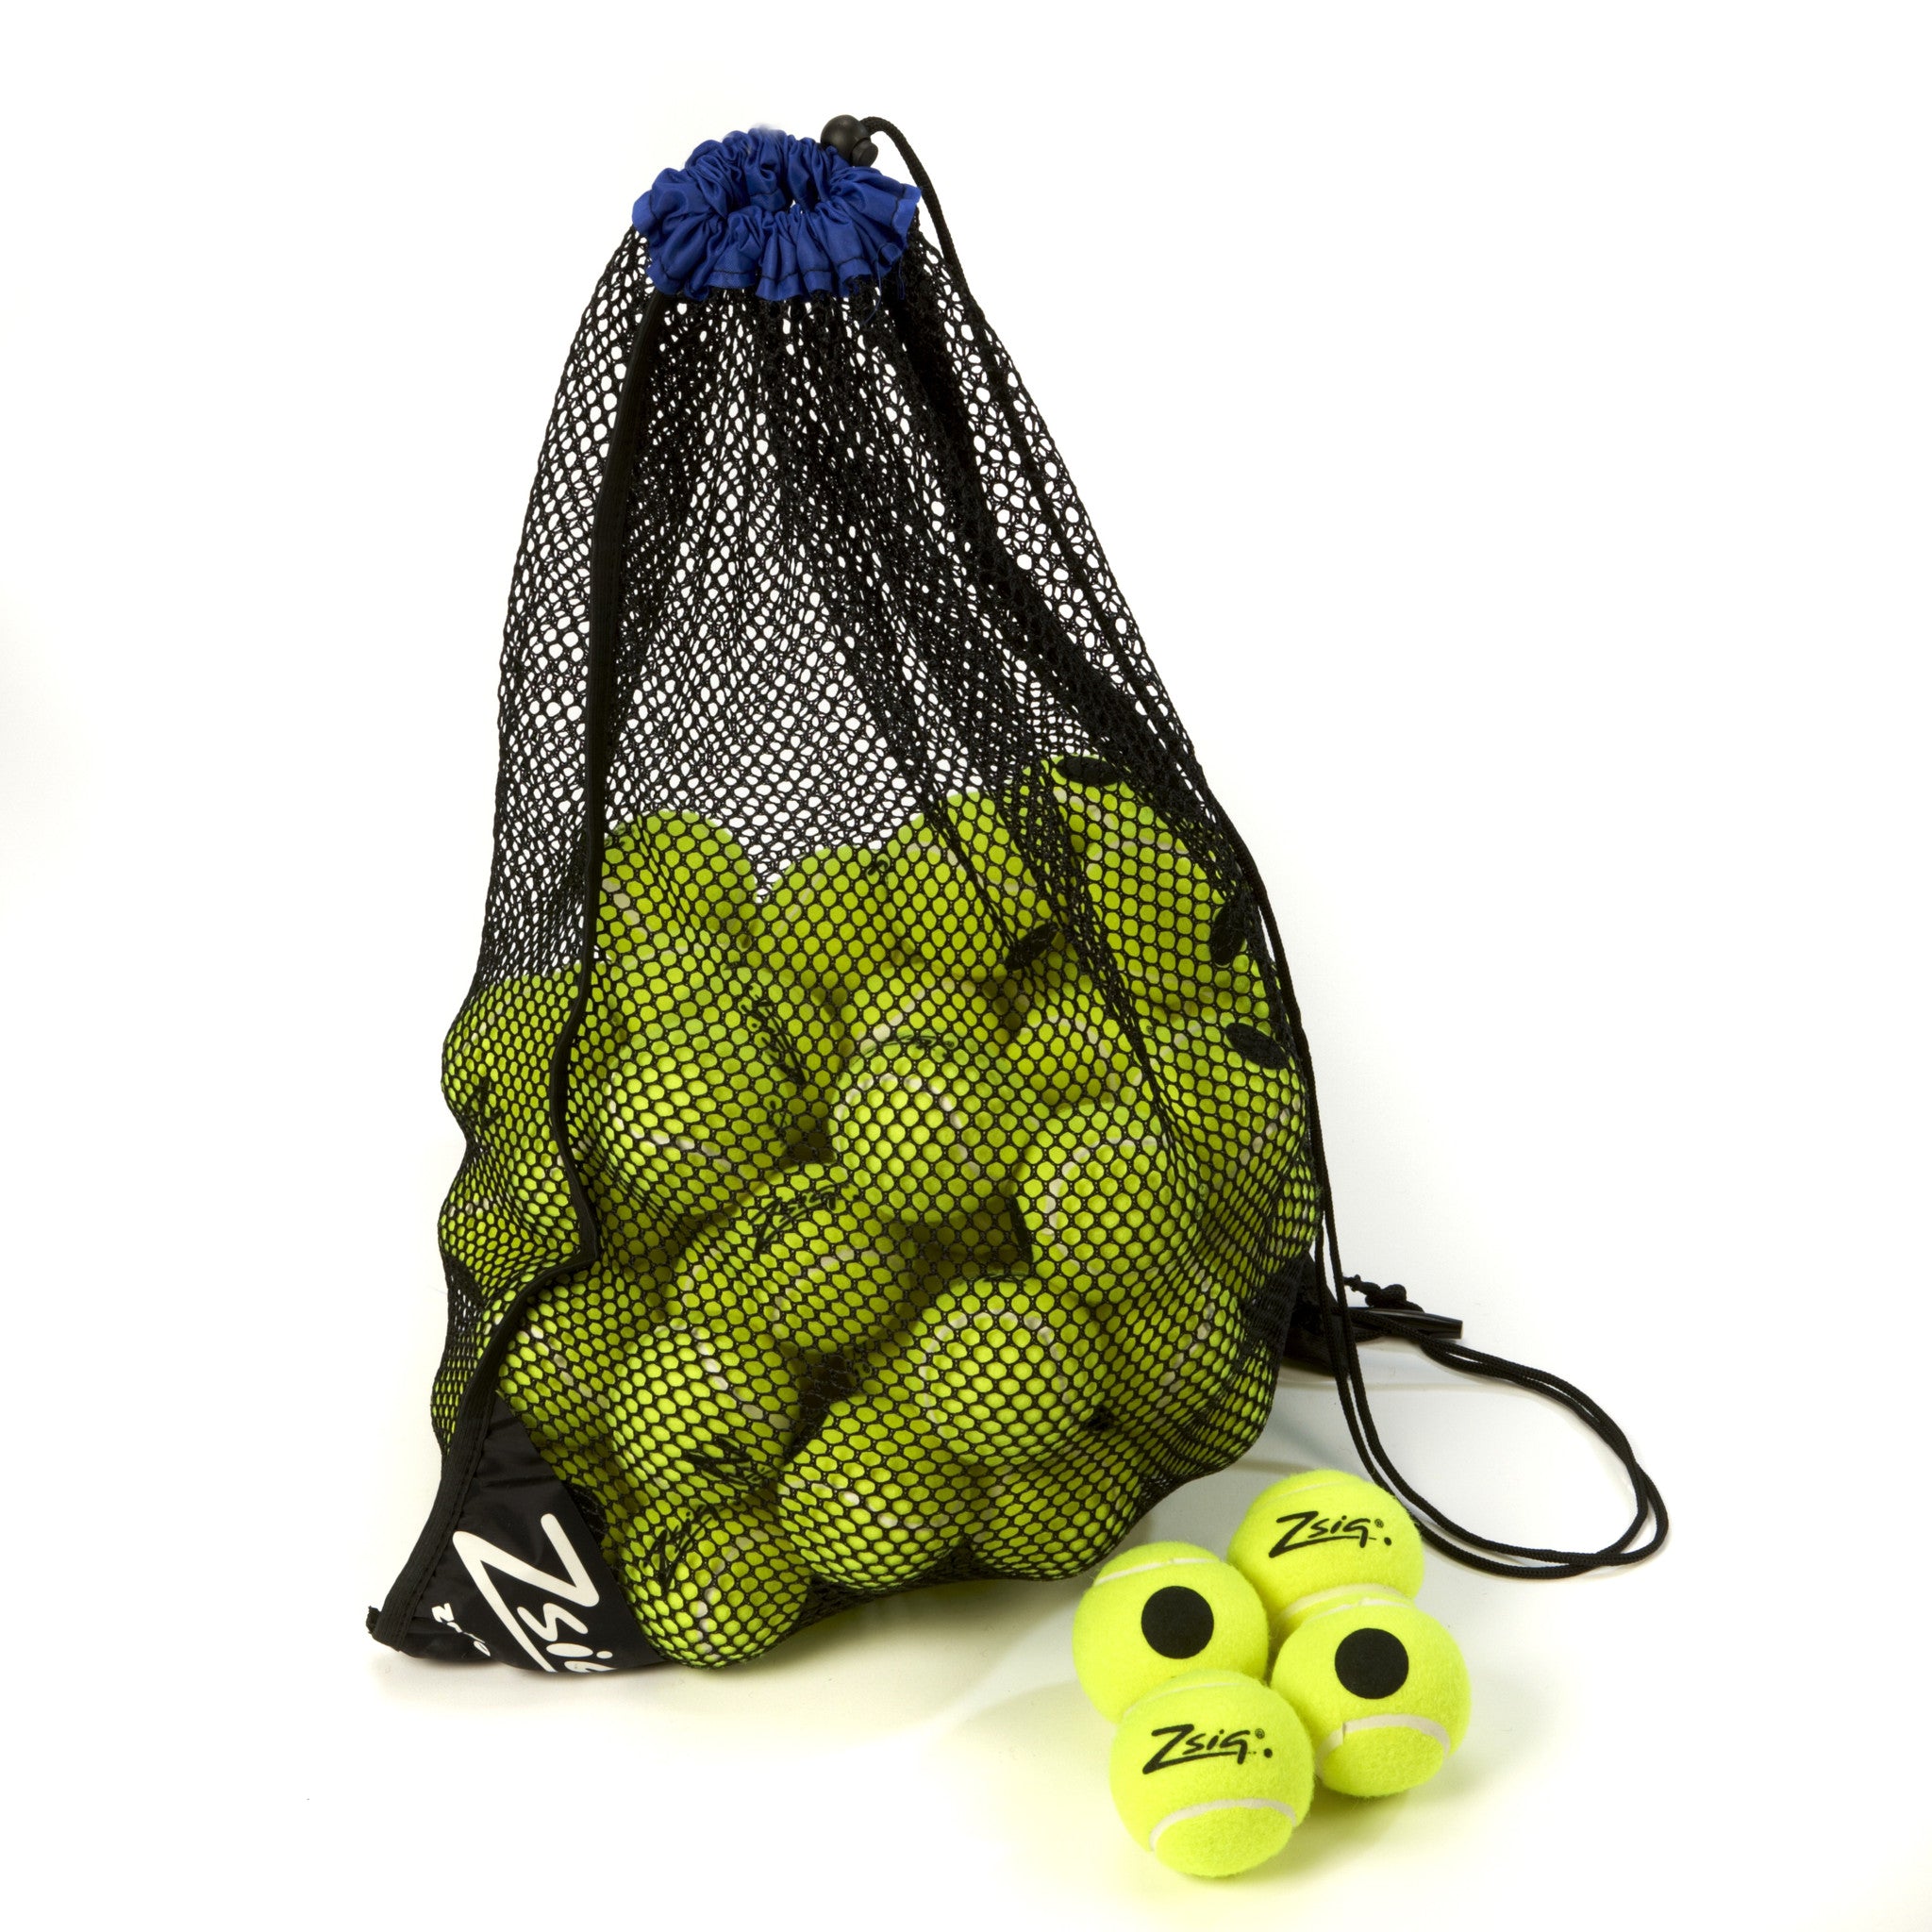 Tennis Training Balls. 5 dozen Zsig Black Dot yellow tennis ball.